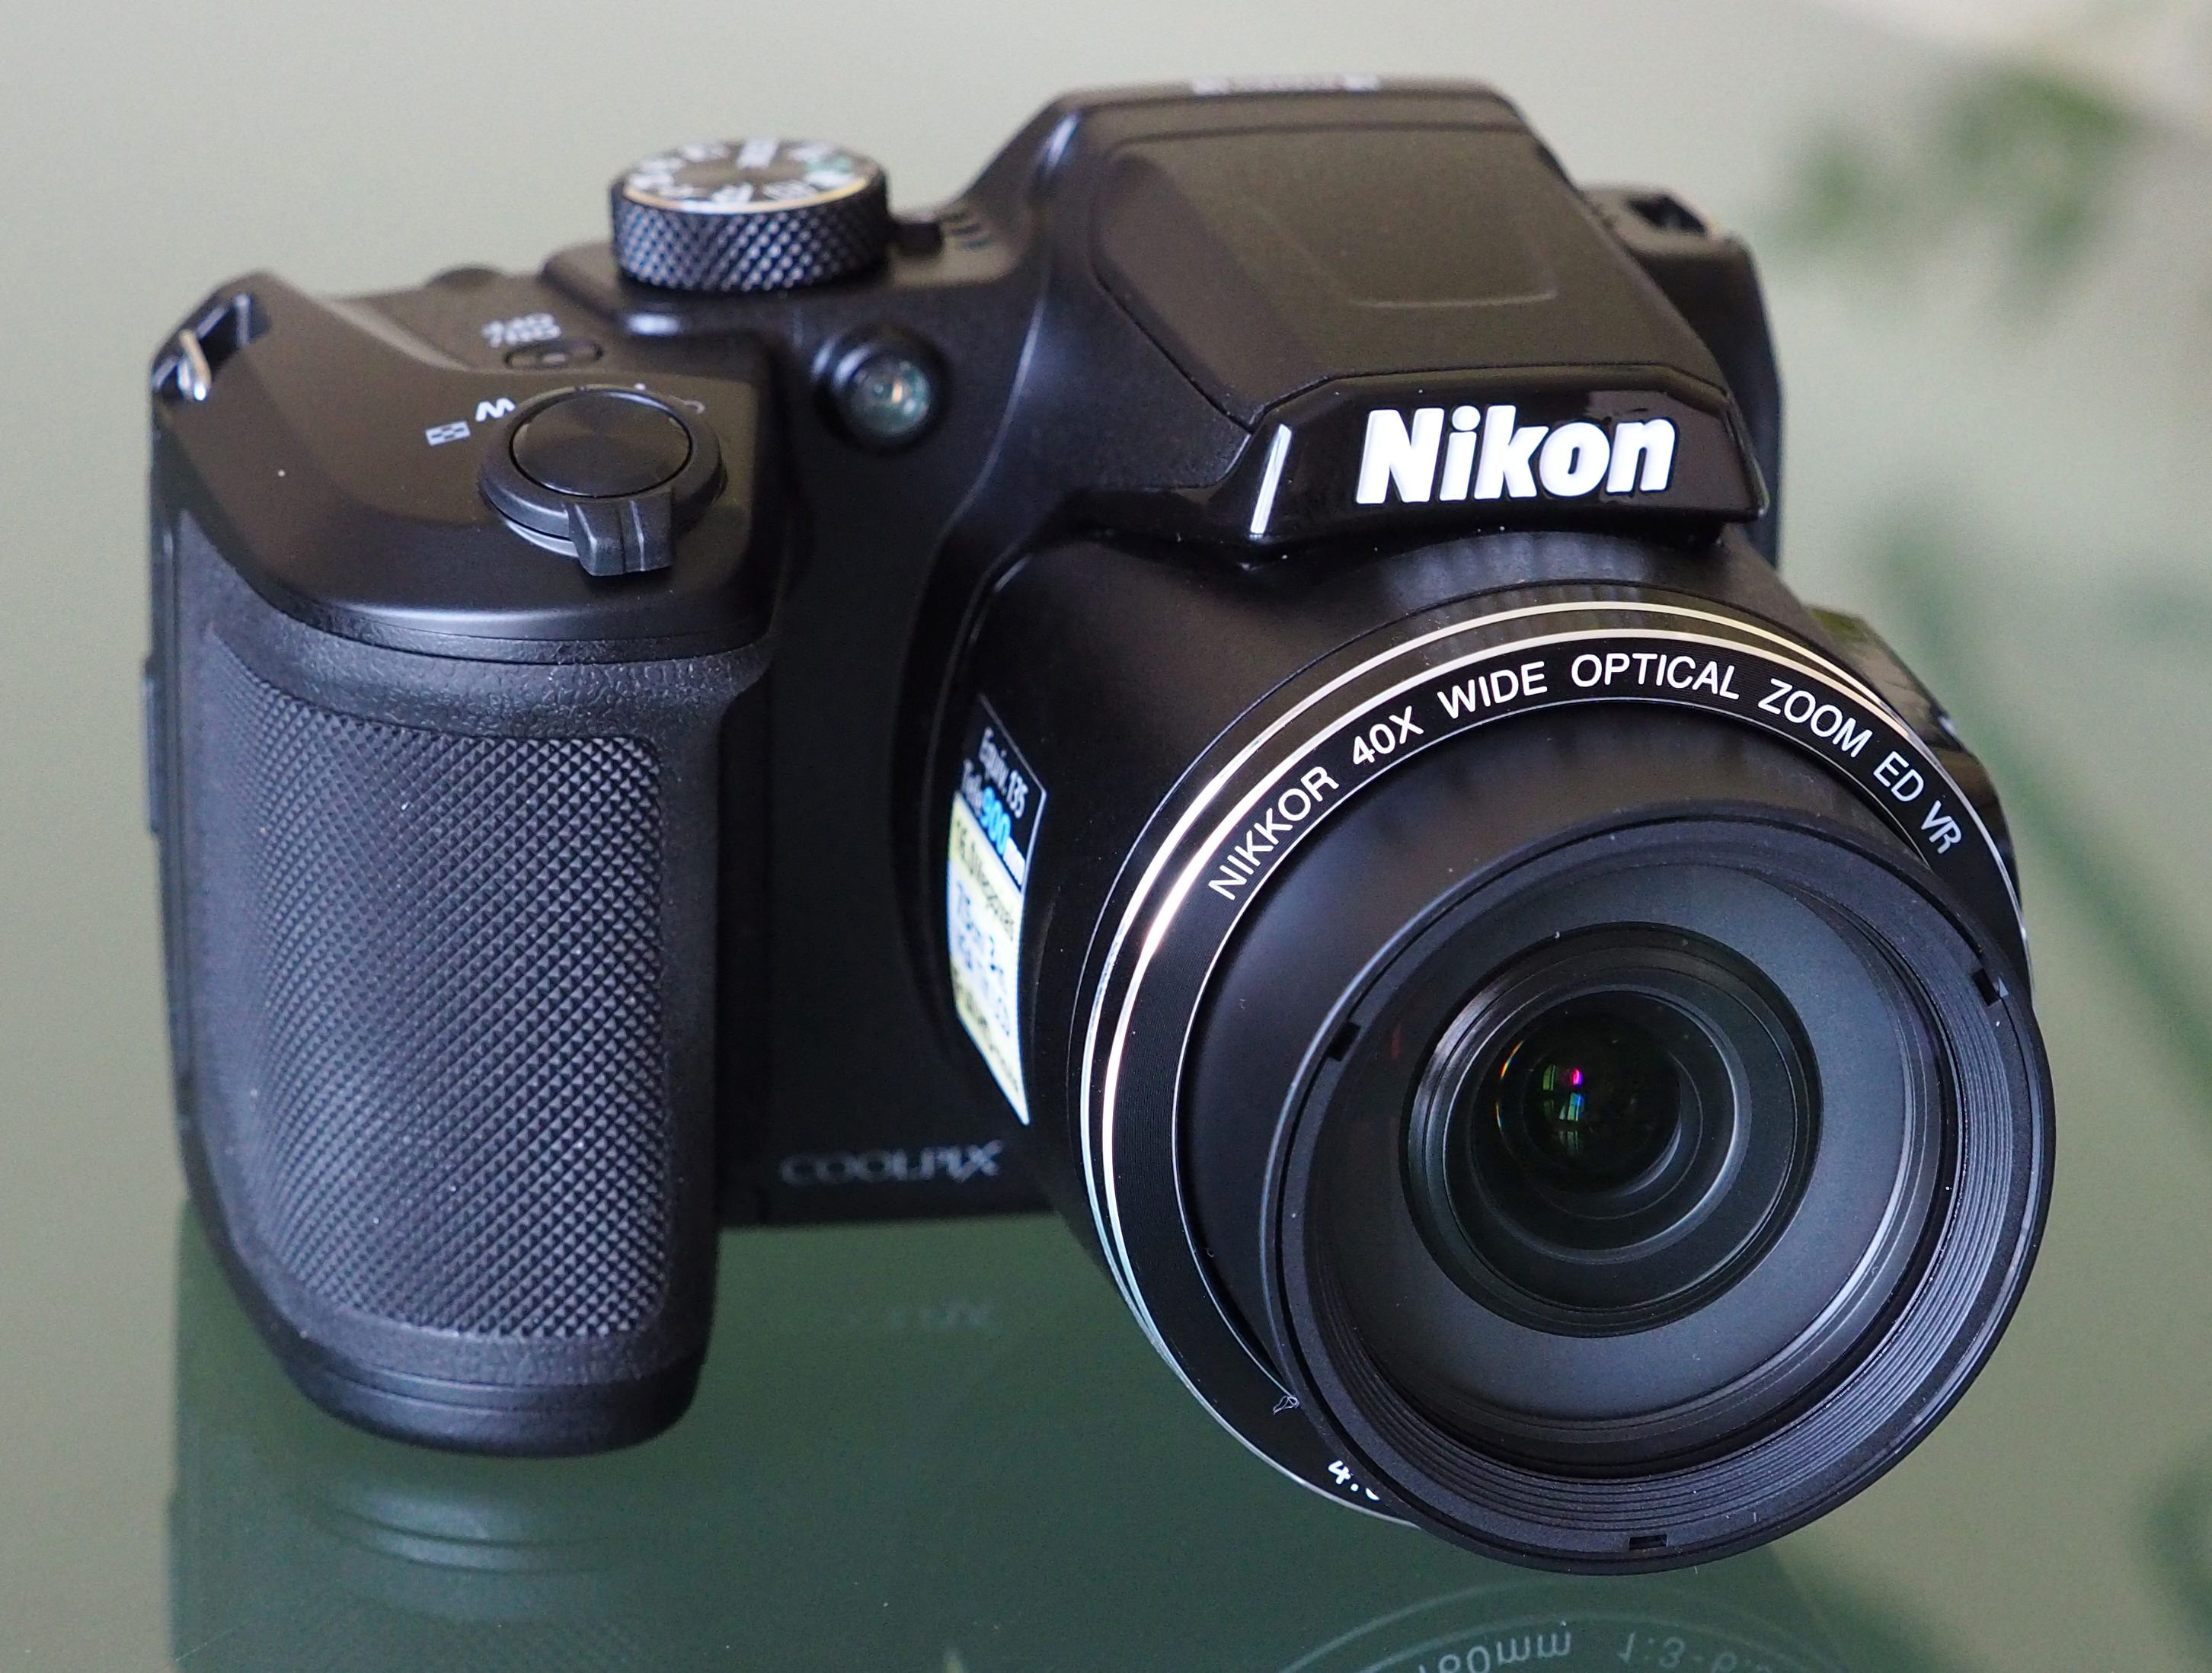 Nikon COOLPIX B500 Review: A Wi-Fi Camera That Does Not Impress